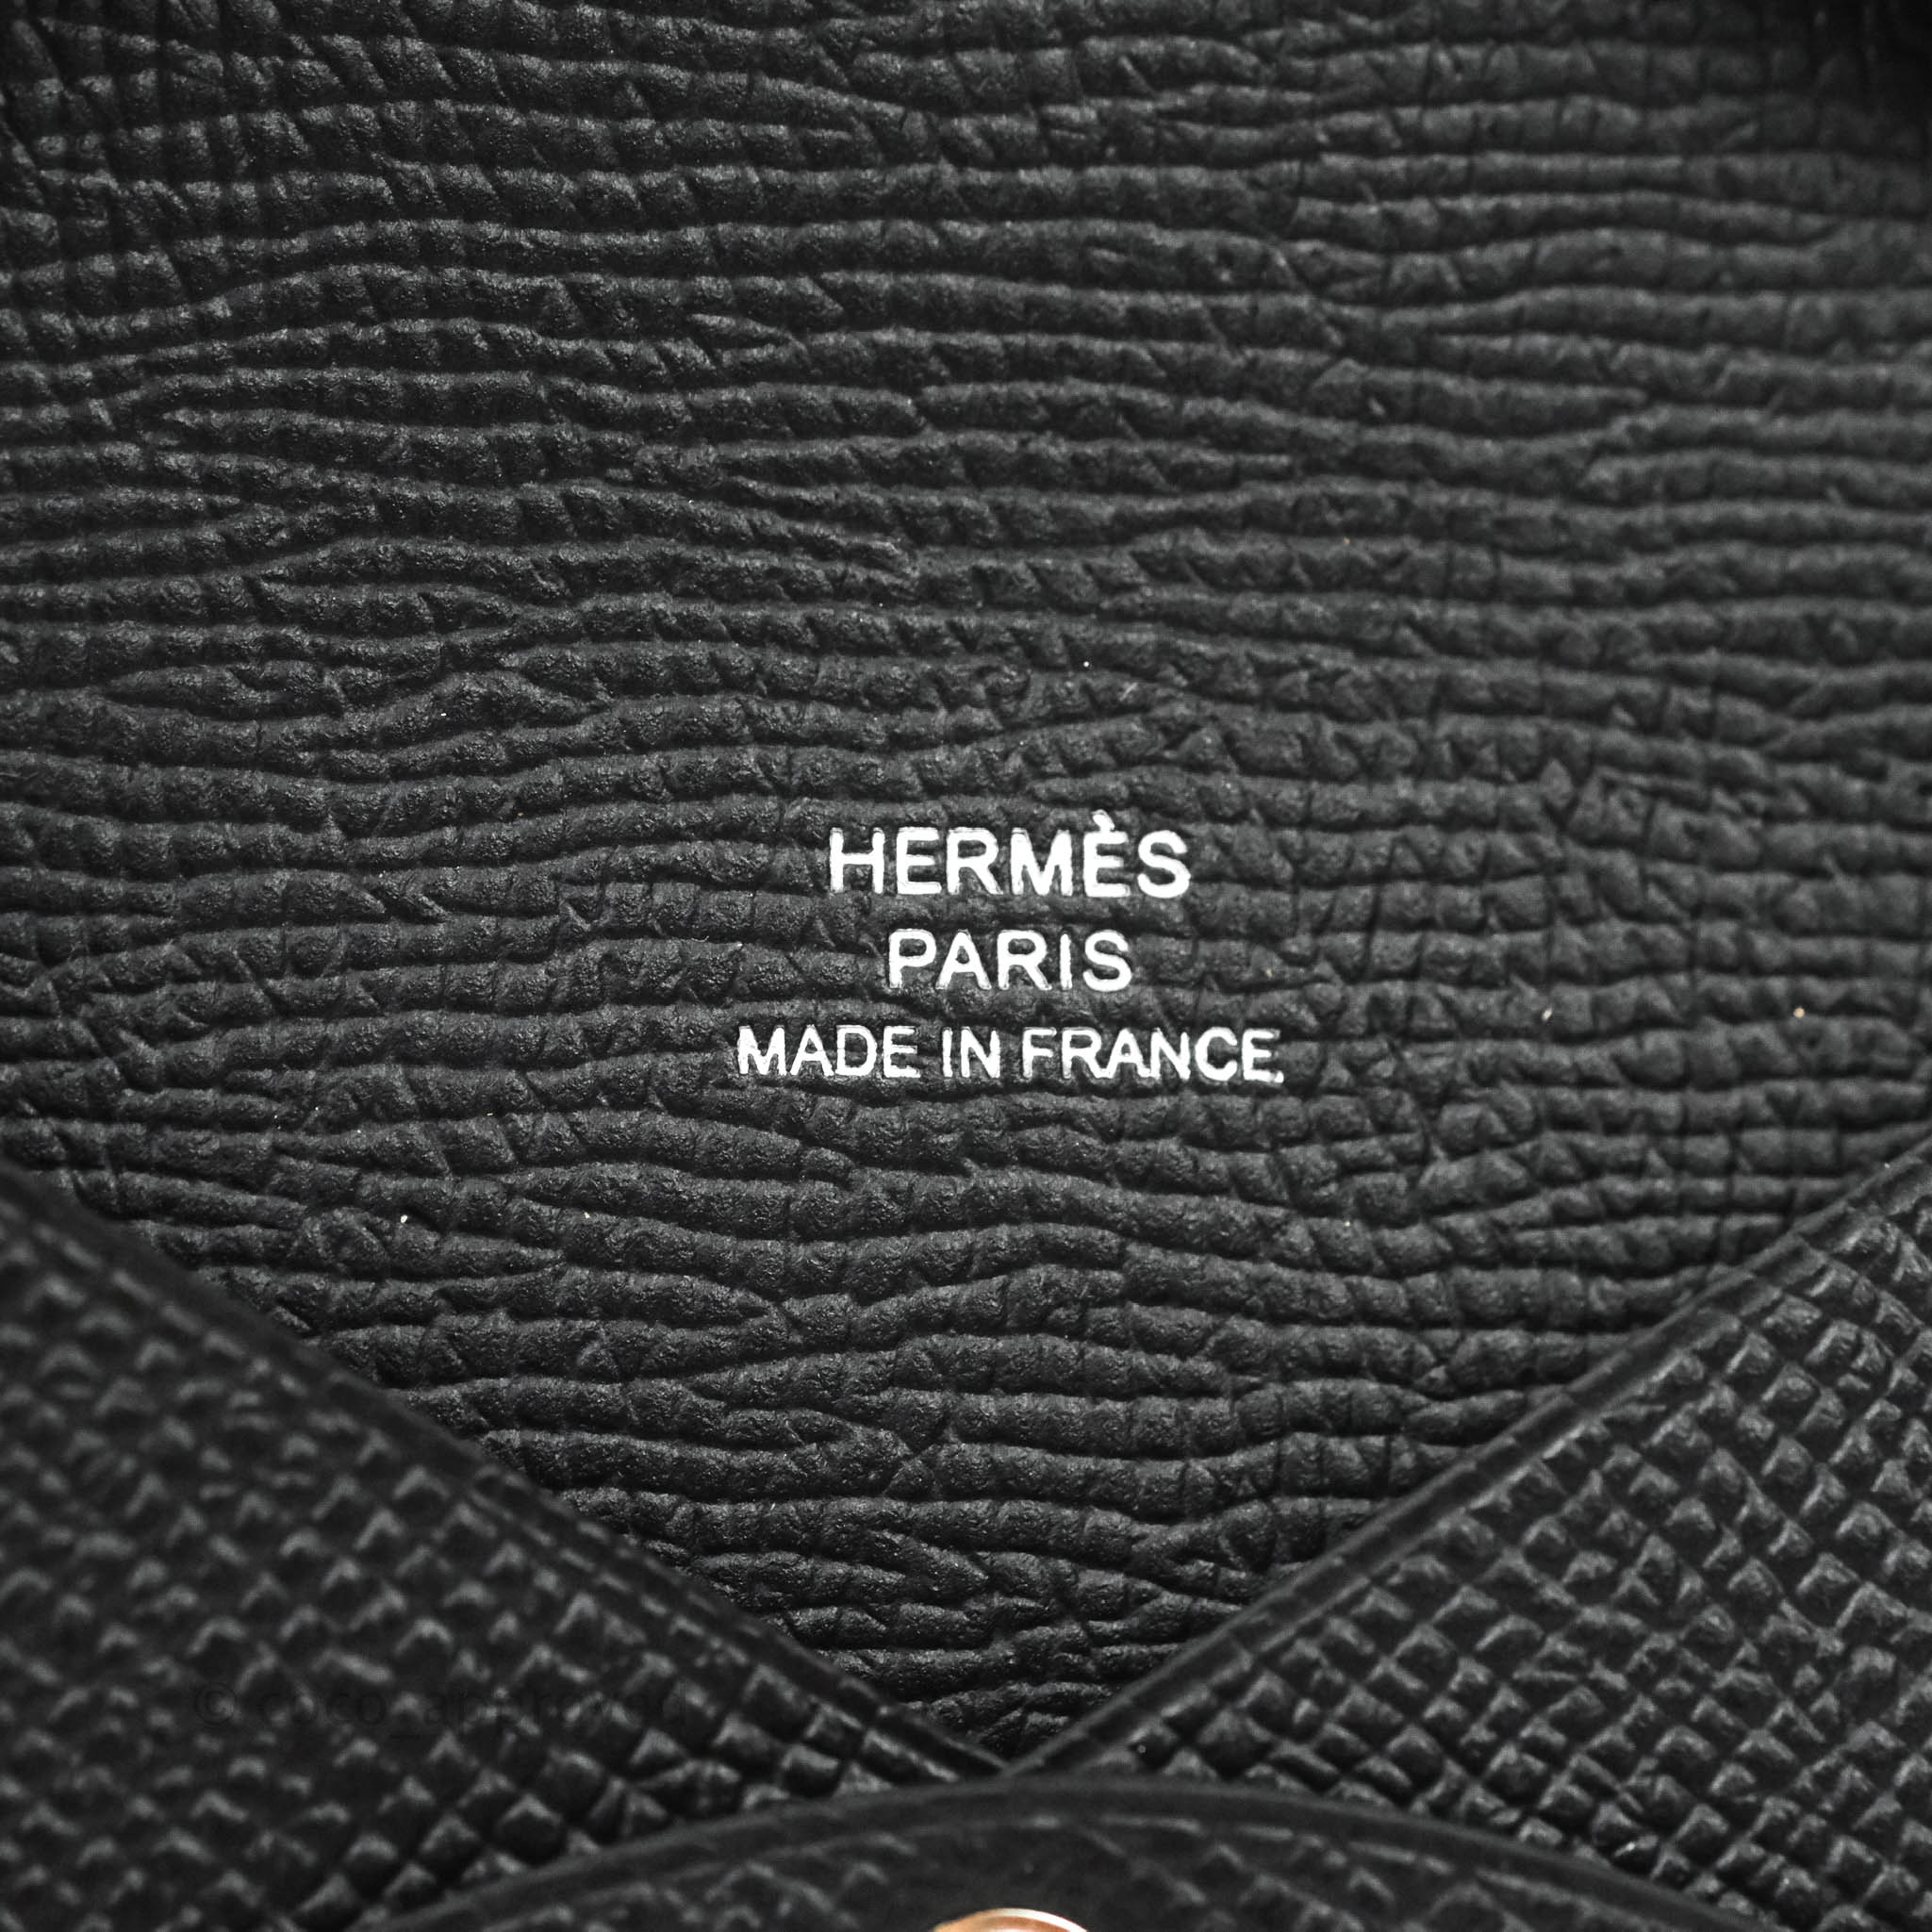 Hermès Calvi Card Holder Gold Epsom – Coco Approved Studio